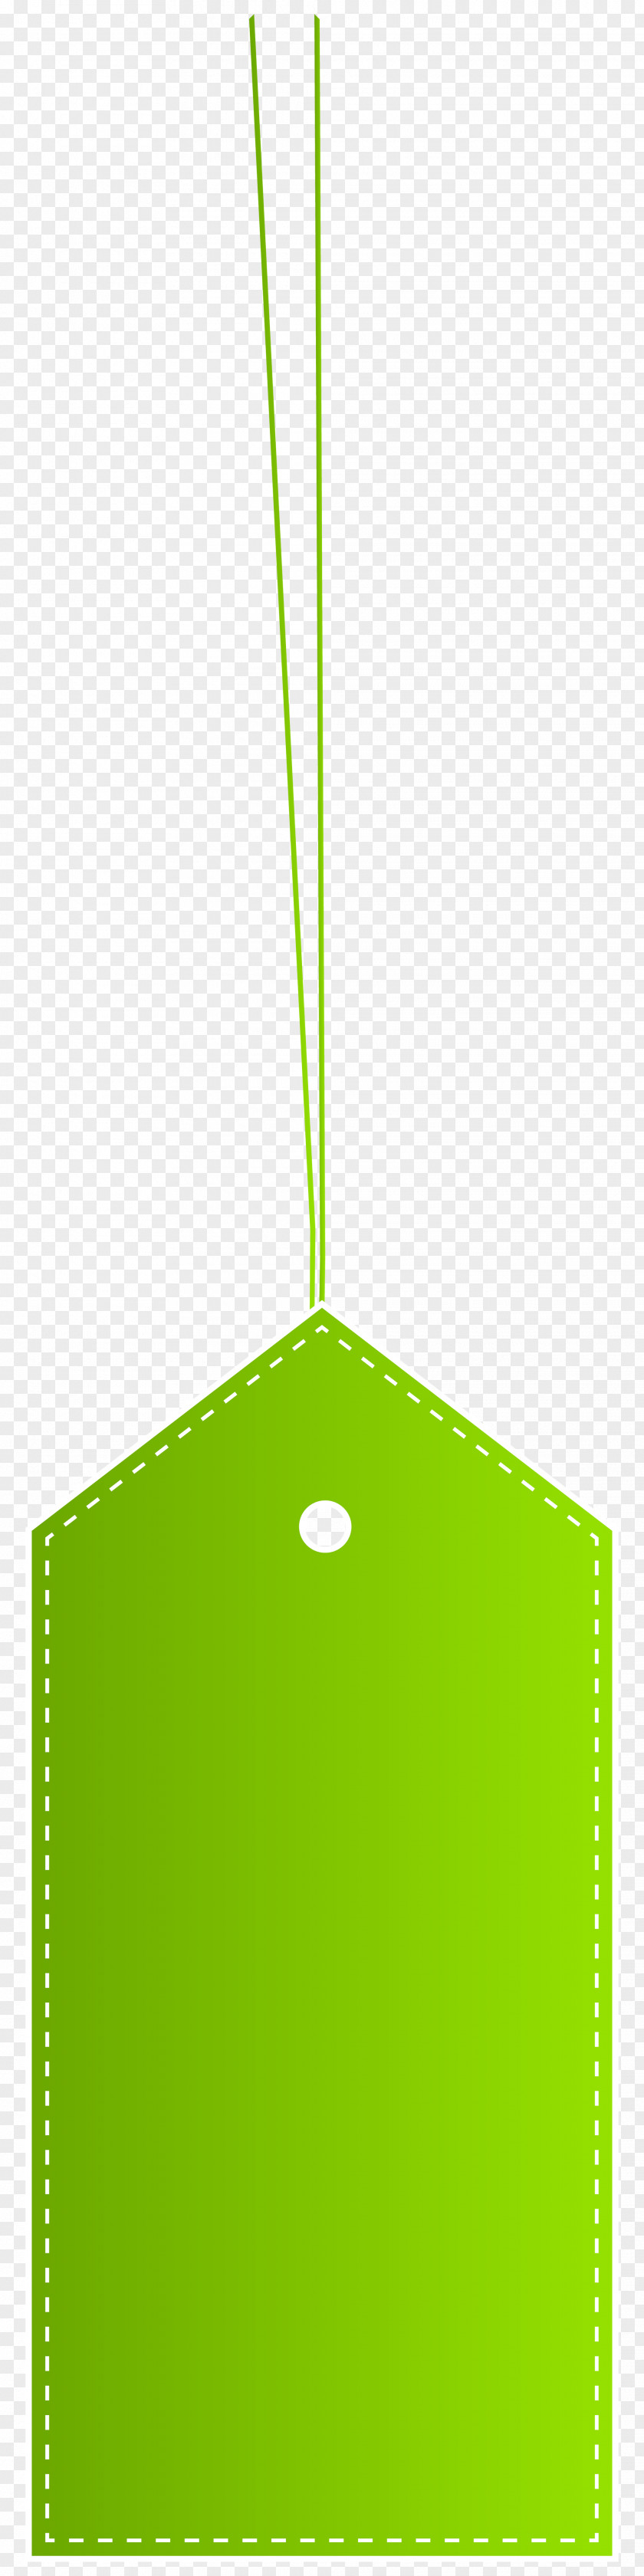 Green Template Label Transparent Clip Art Image Brand Product Design PNG